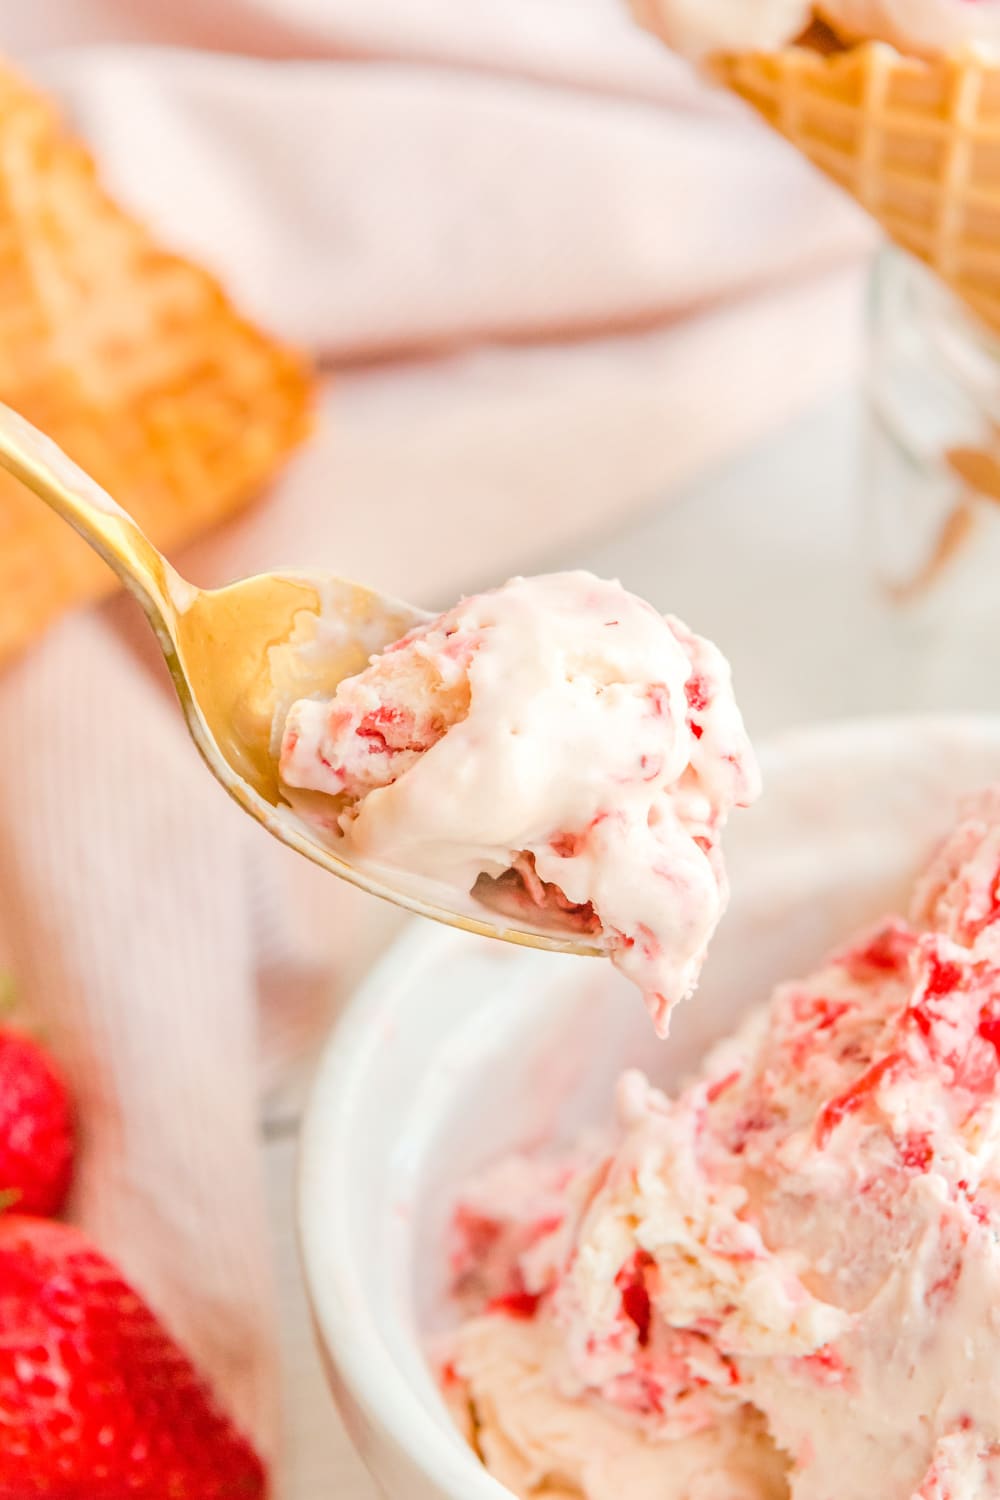 A bite of ice cream on a spoon near a bowl on ice cream.